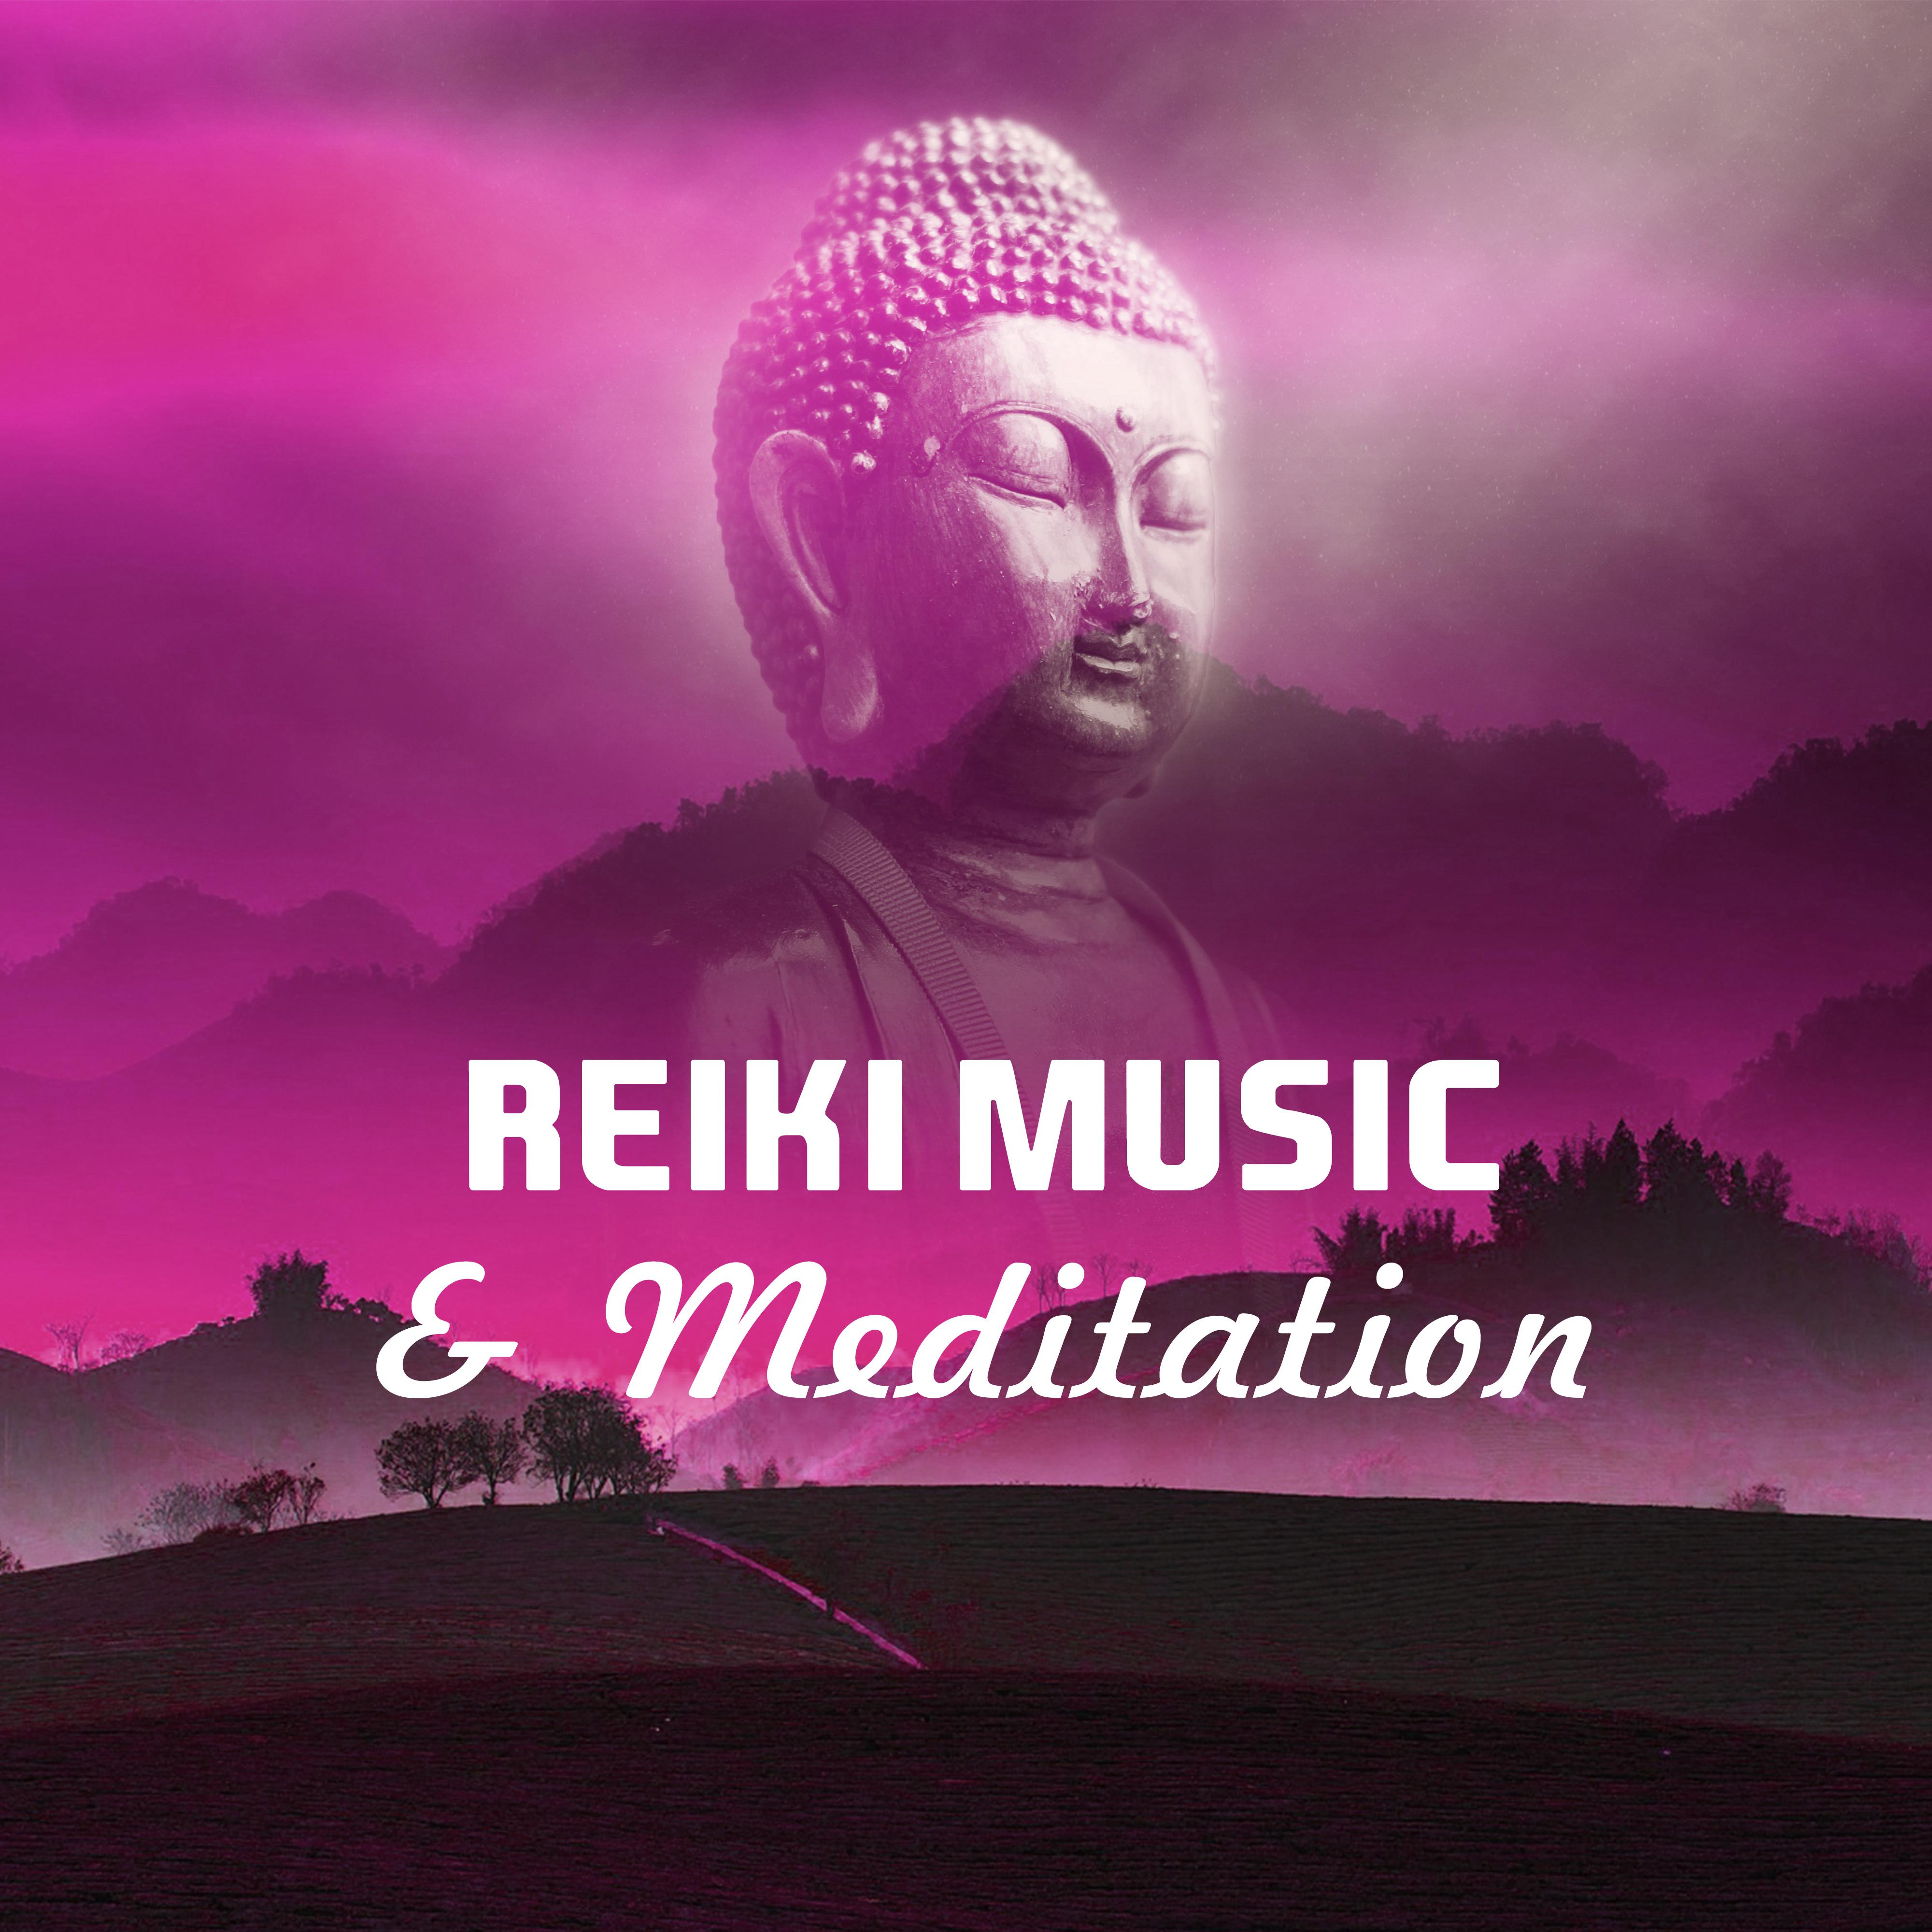 Reiki Music  Meditation  Training Yoga, Soft Mindfulness, Spirituality, Relax, Mantra, Meditate, Chakra Balancing